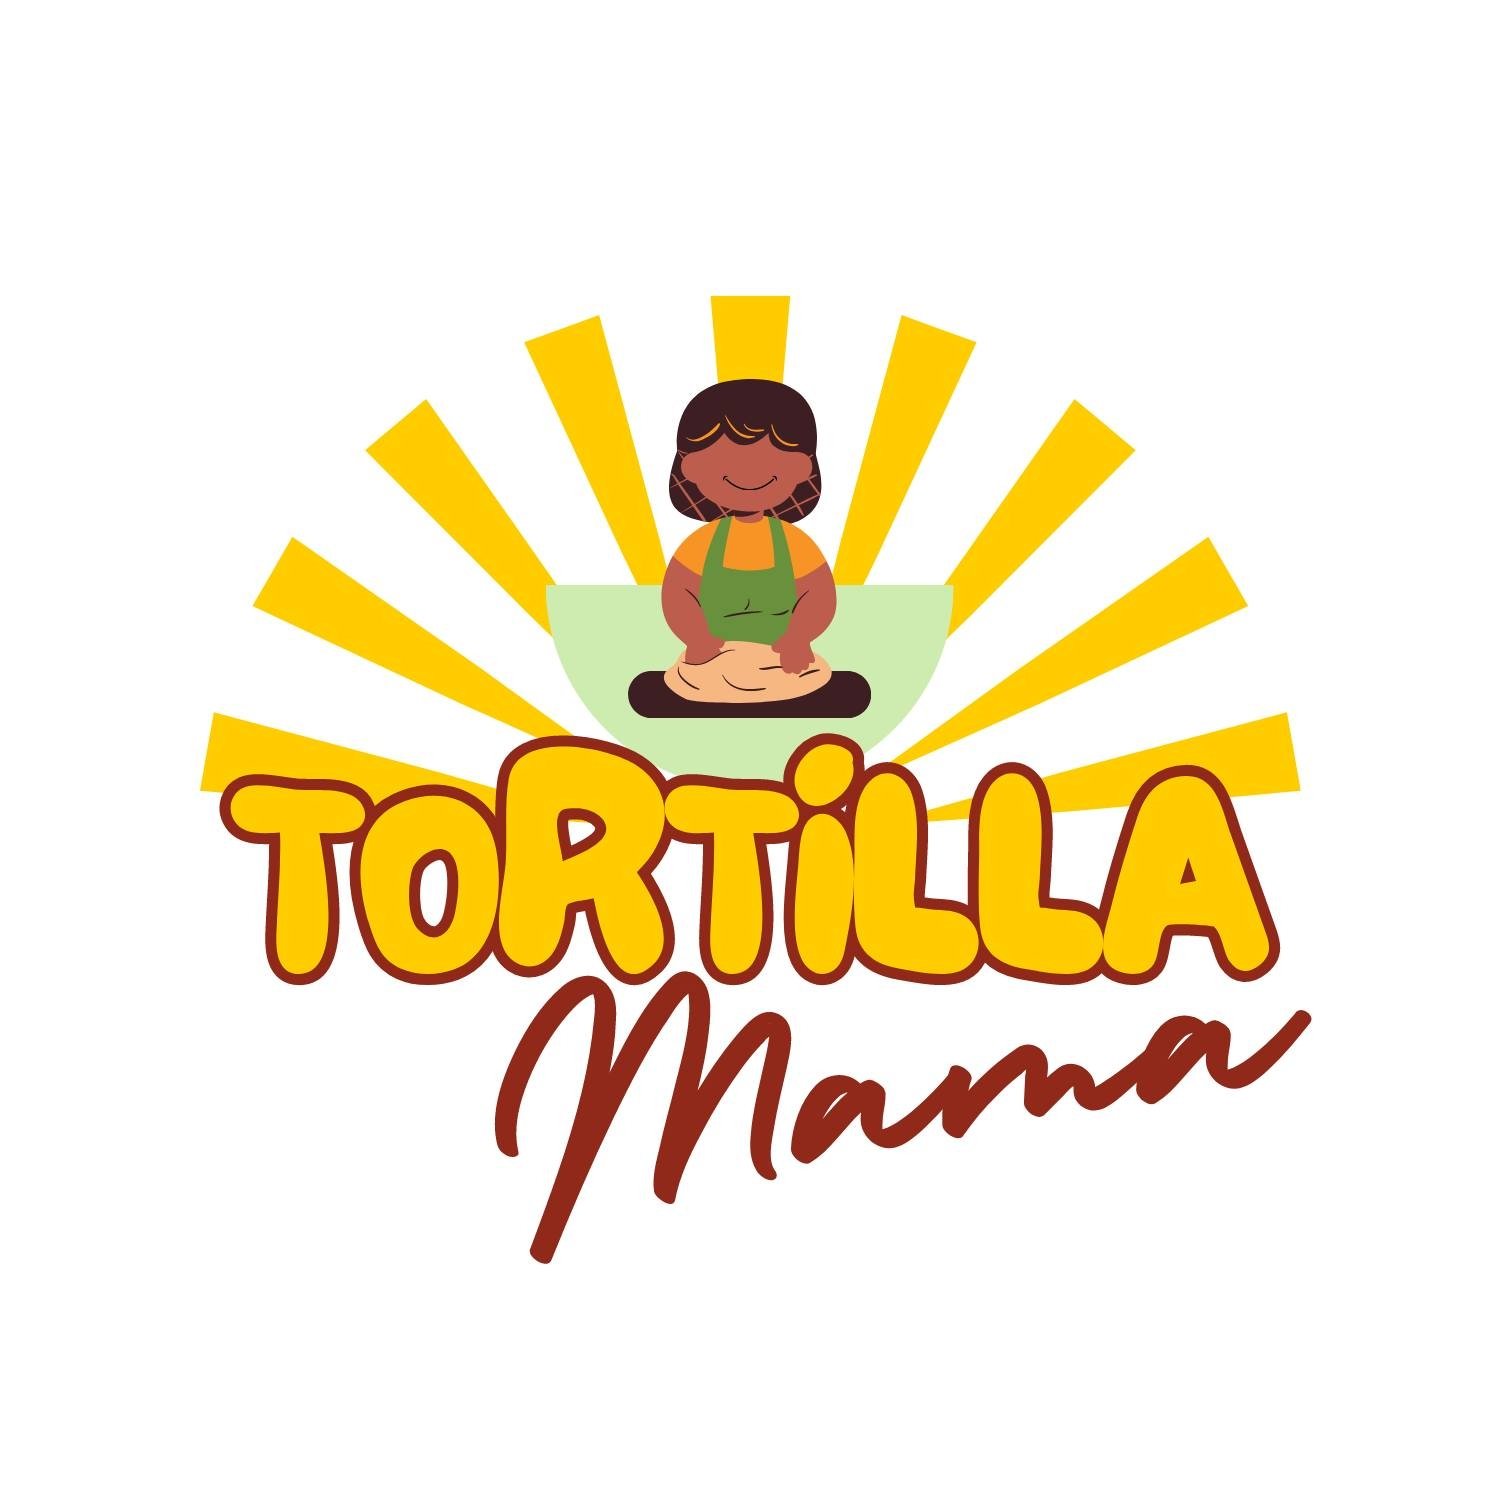 Tortilla Mama: Authentic Tex-Mex Food in Iligan City